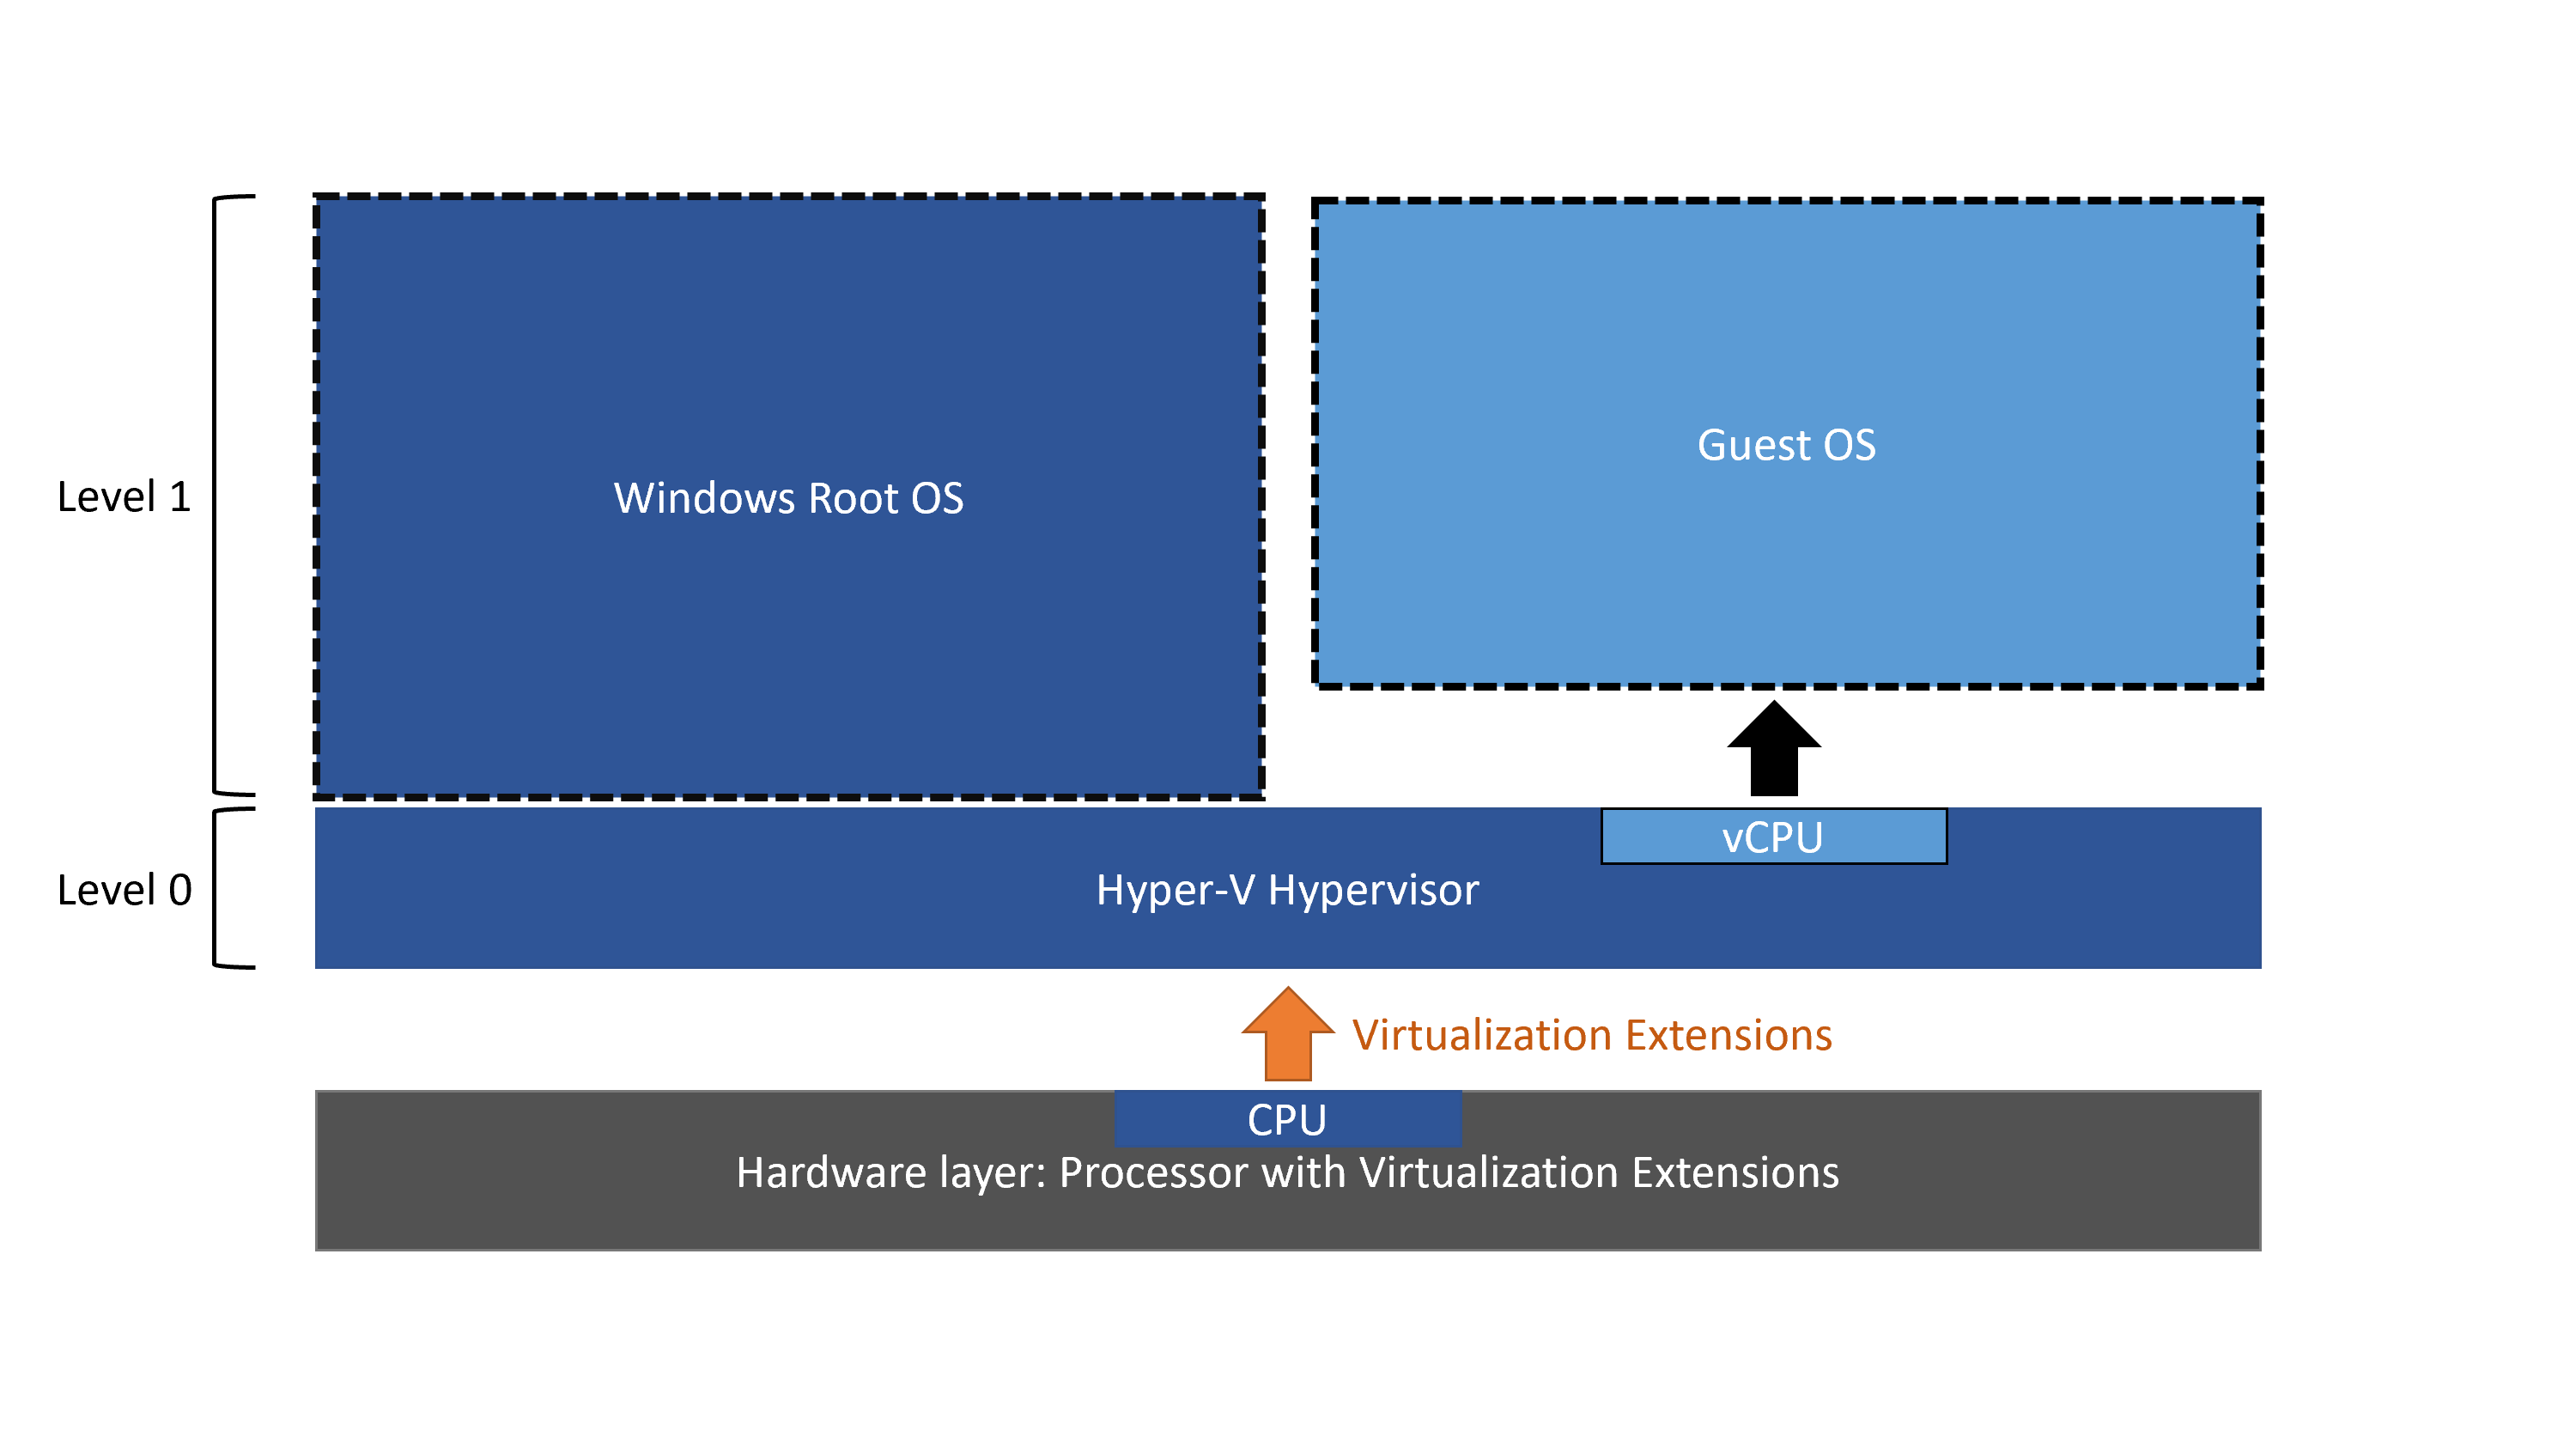 Does Hyper-V affect Windows performance?